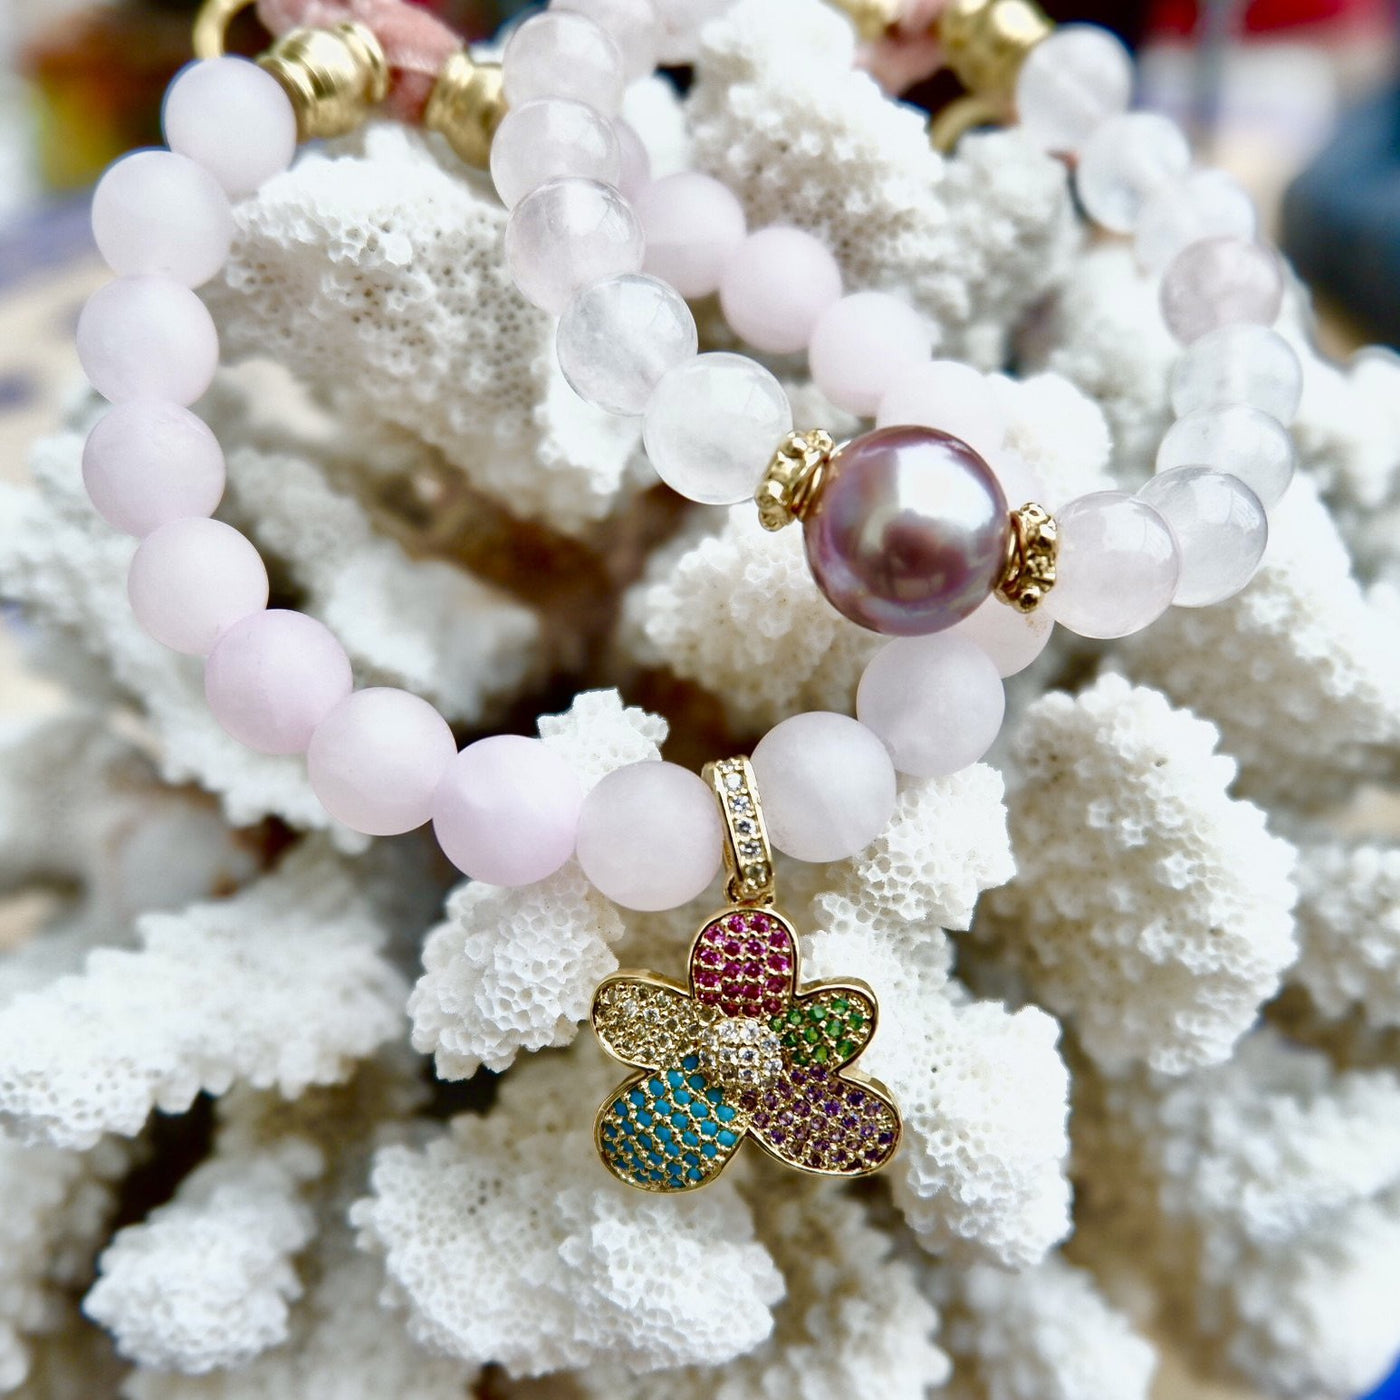 rose quartz pearl bracelet